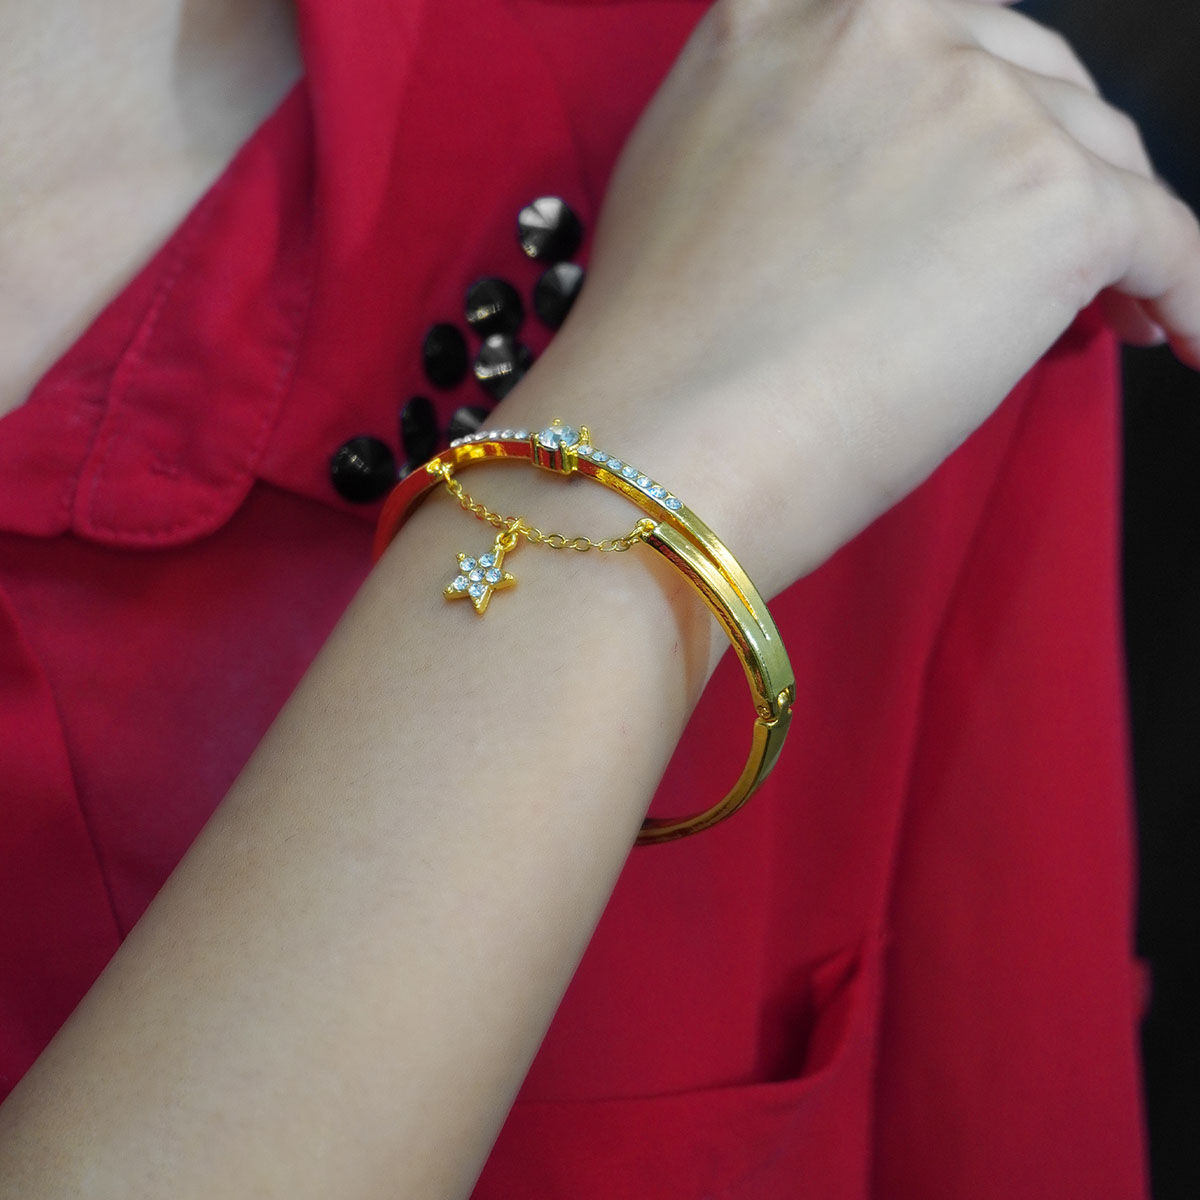 Dazzling Swan bracelet Magnetic closure Swan Pink Rose goldtone plated   Swarovski